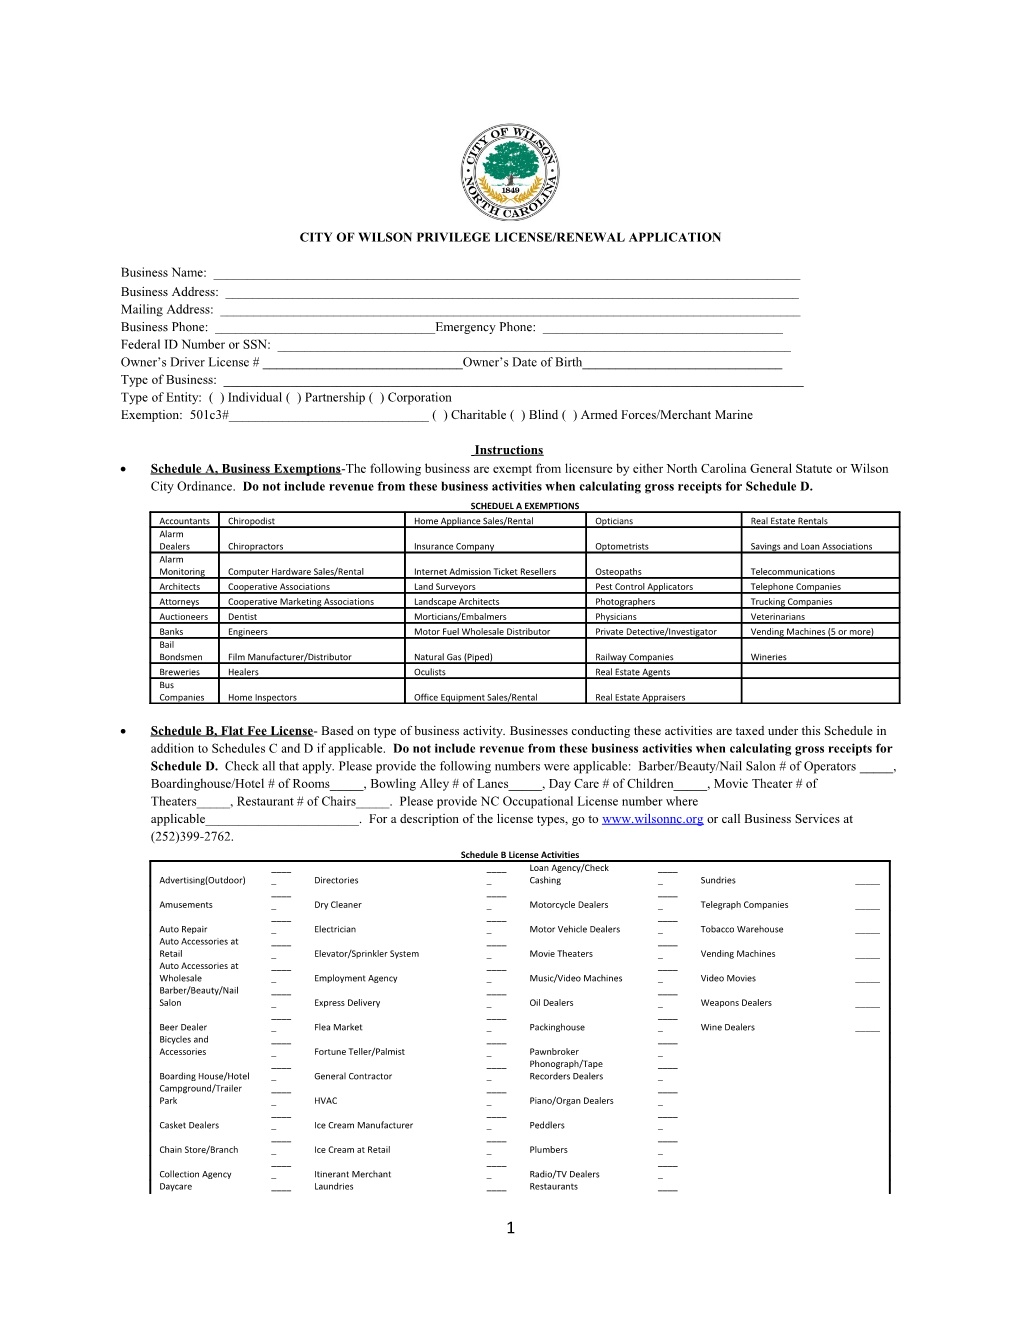 City of Wilson Privilege License/Renewal Application